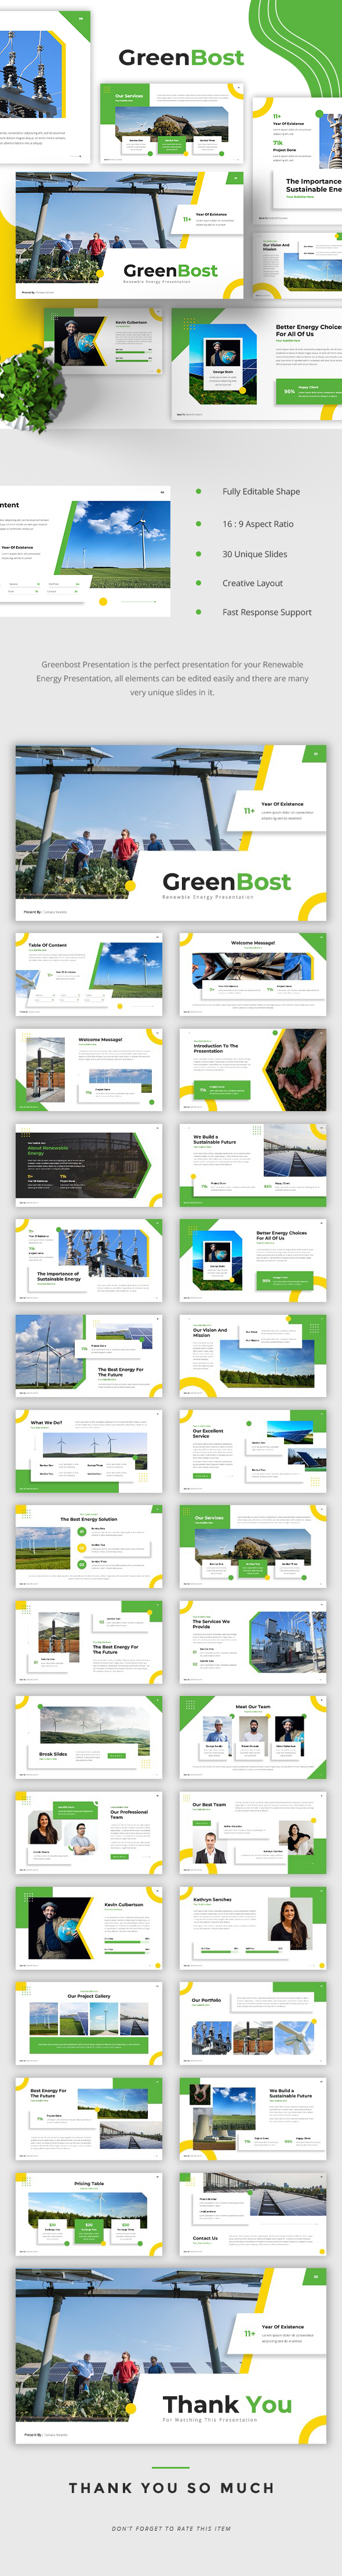 GreenBost - Renewable Energy Google Slides